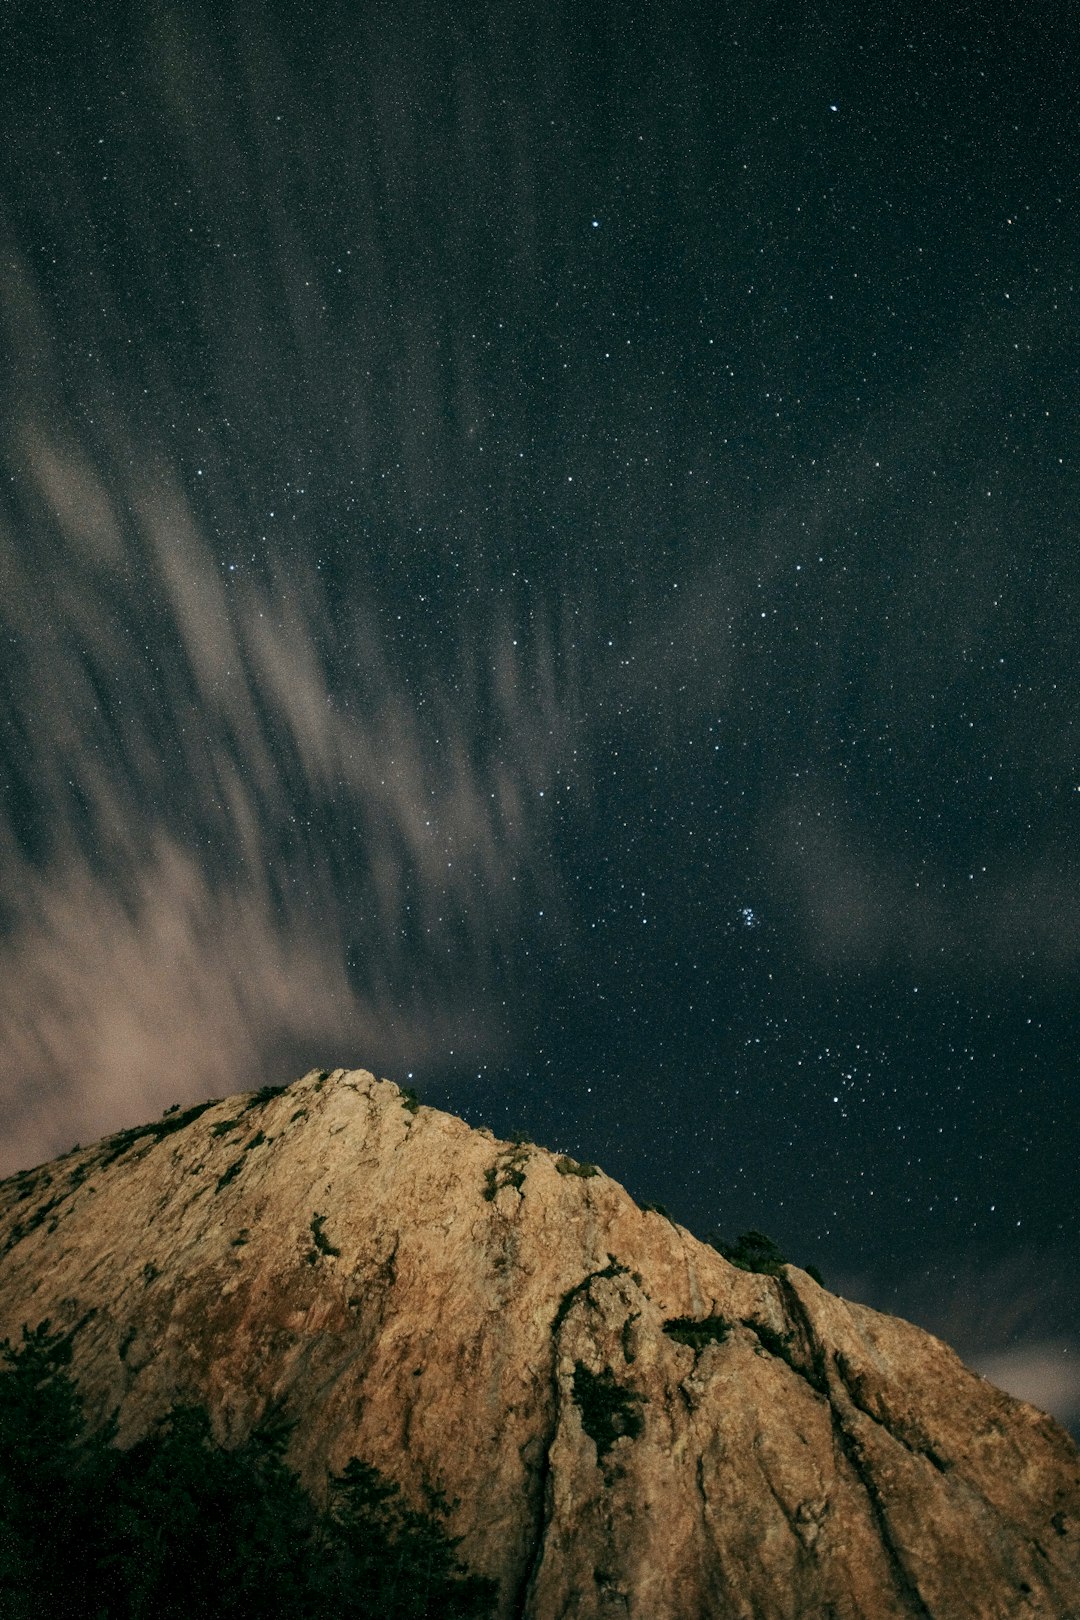 brown rocky mountain under starry night